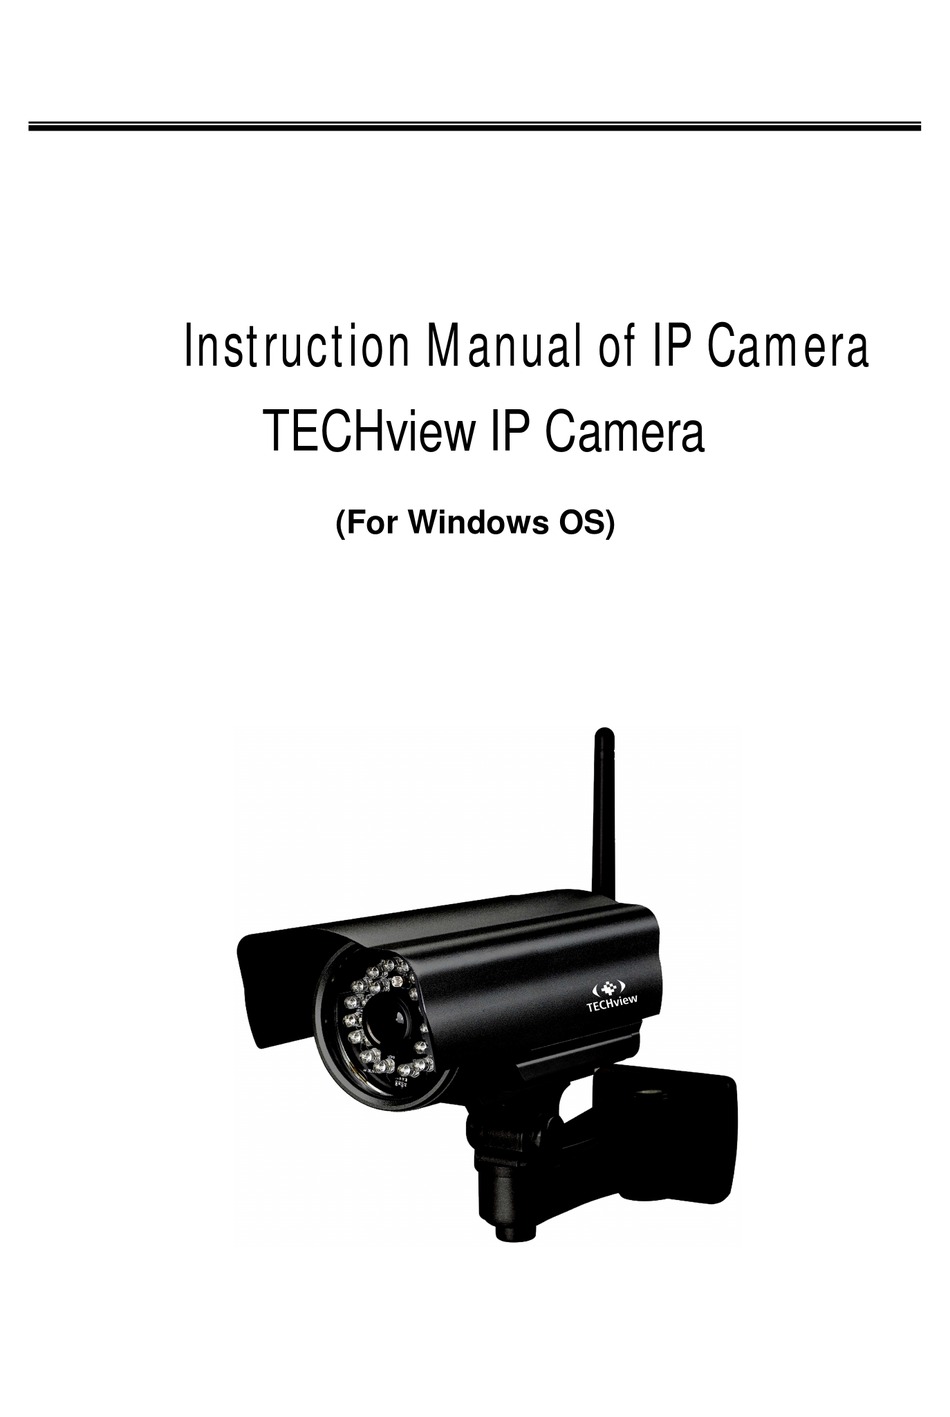 TECHVIEW IP CAMERA INSTRUCTION MANUAL Pdf Download | ManualsLib